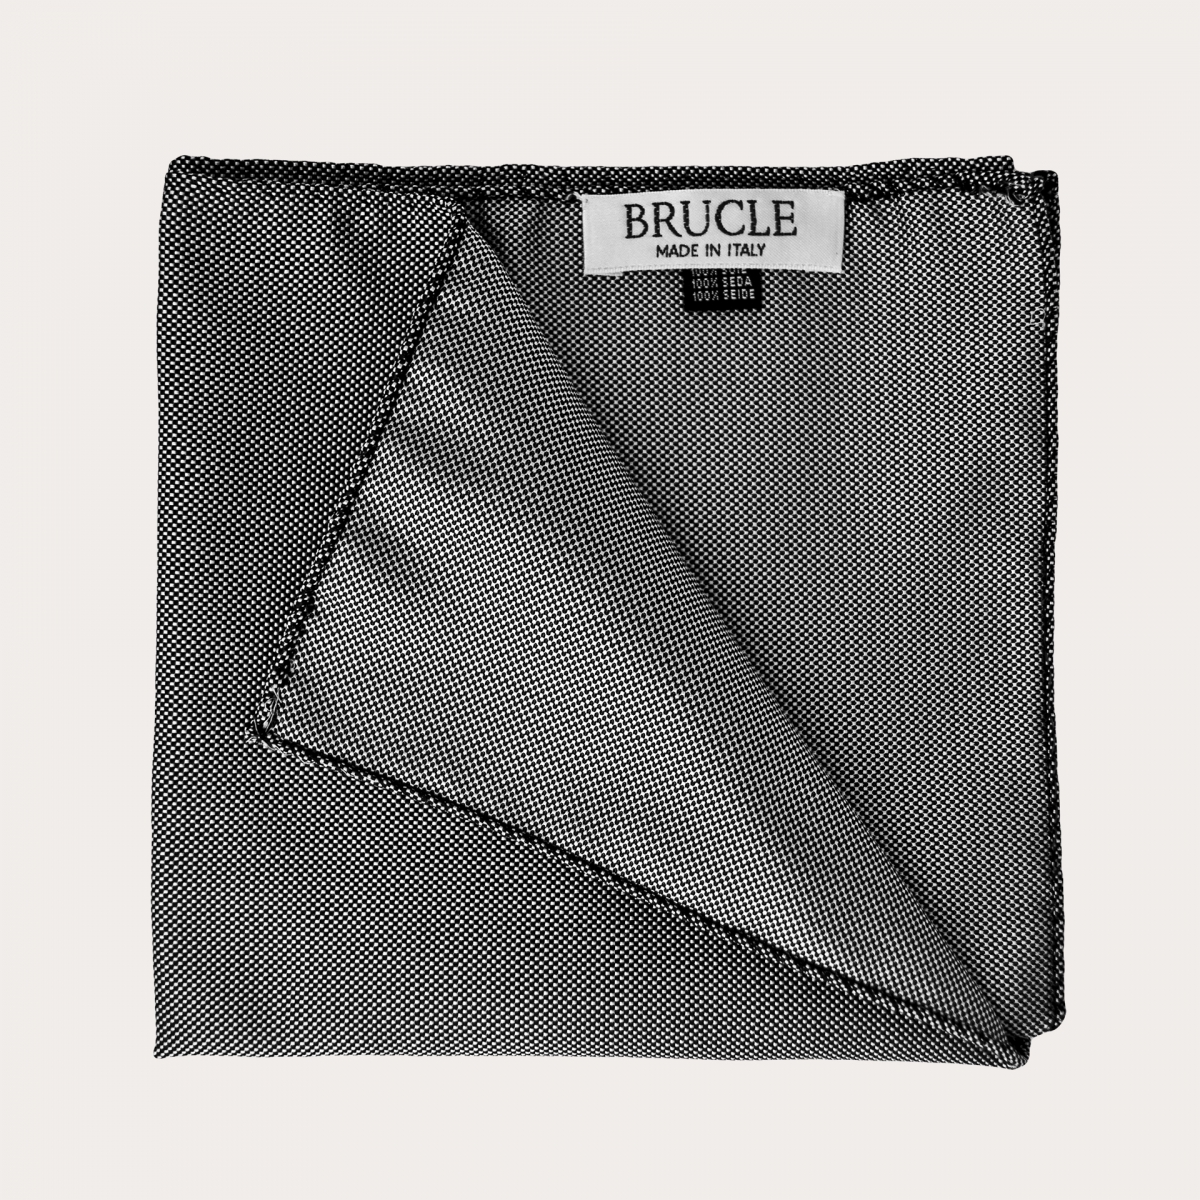 Elegant pocket handkerchief in jacquard silk, black and white pincushion